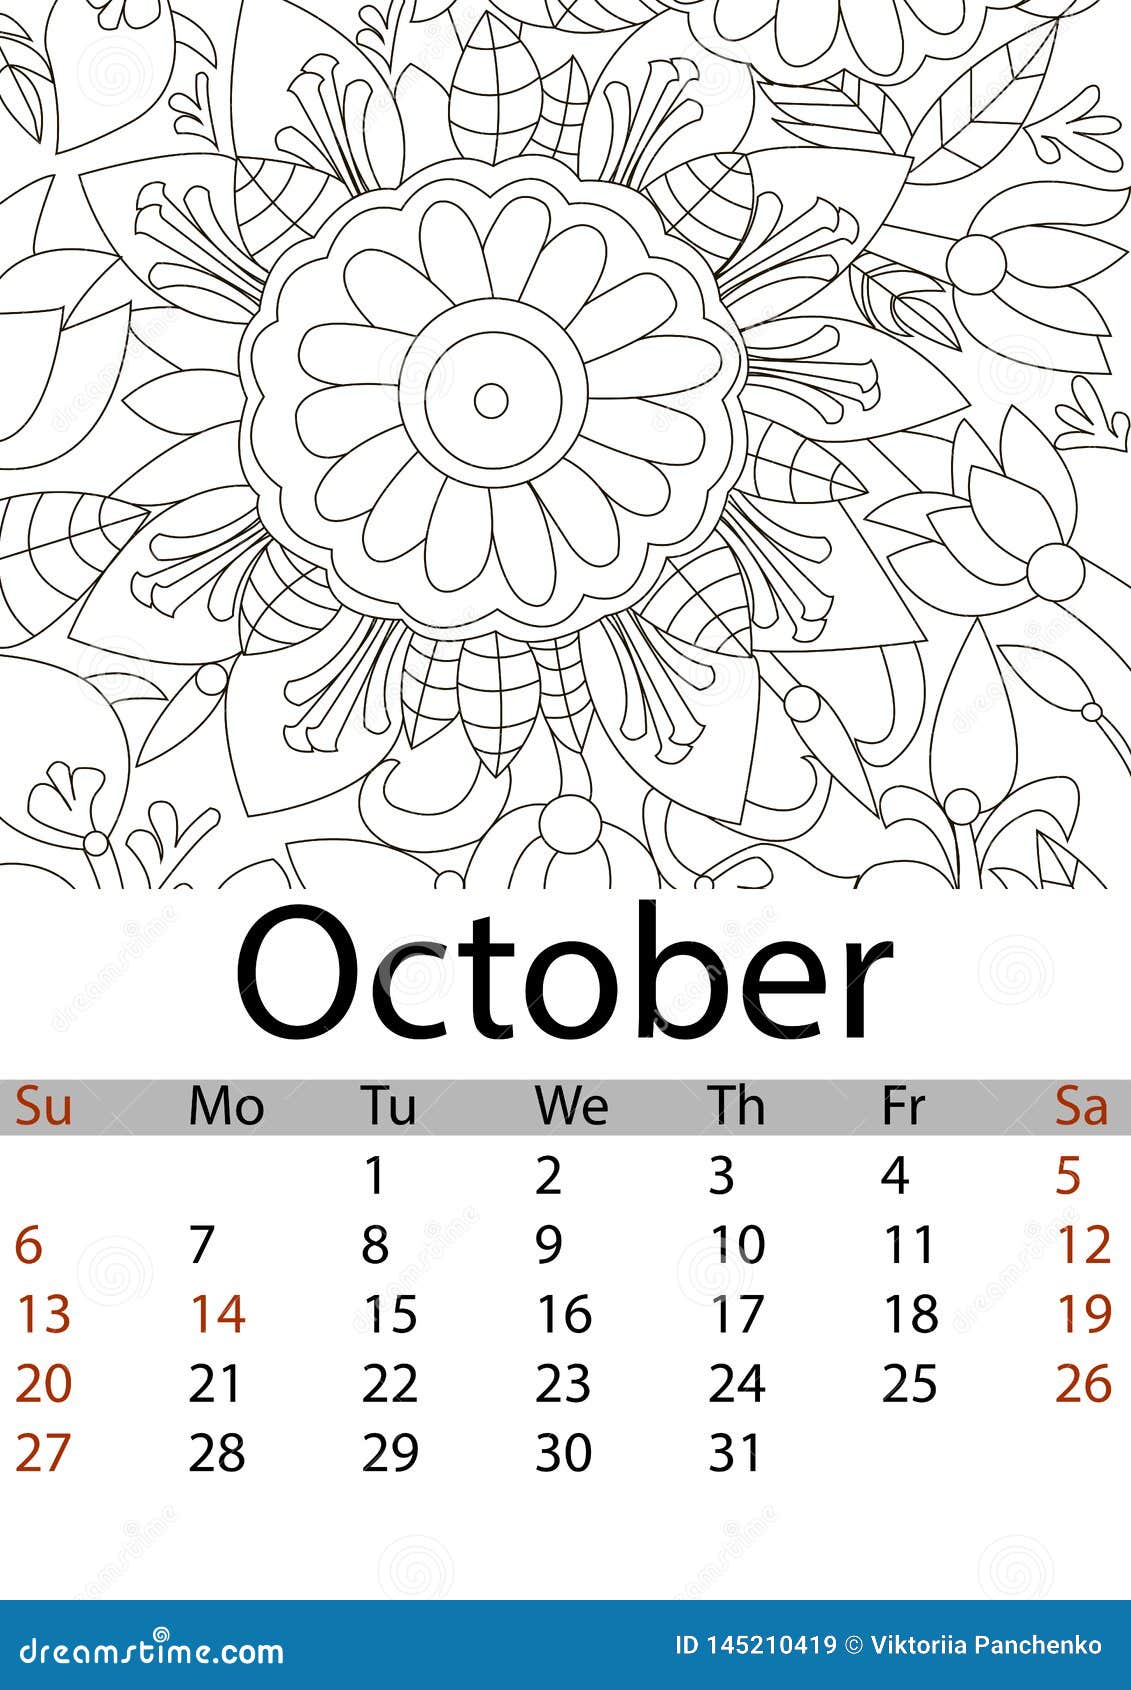 Calendar october month antistress coloring flower mandala patterns raster stock illustration